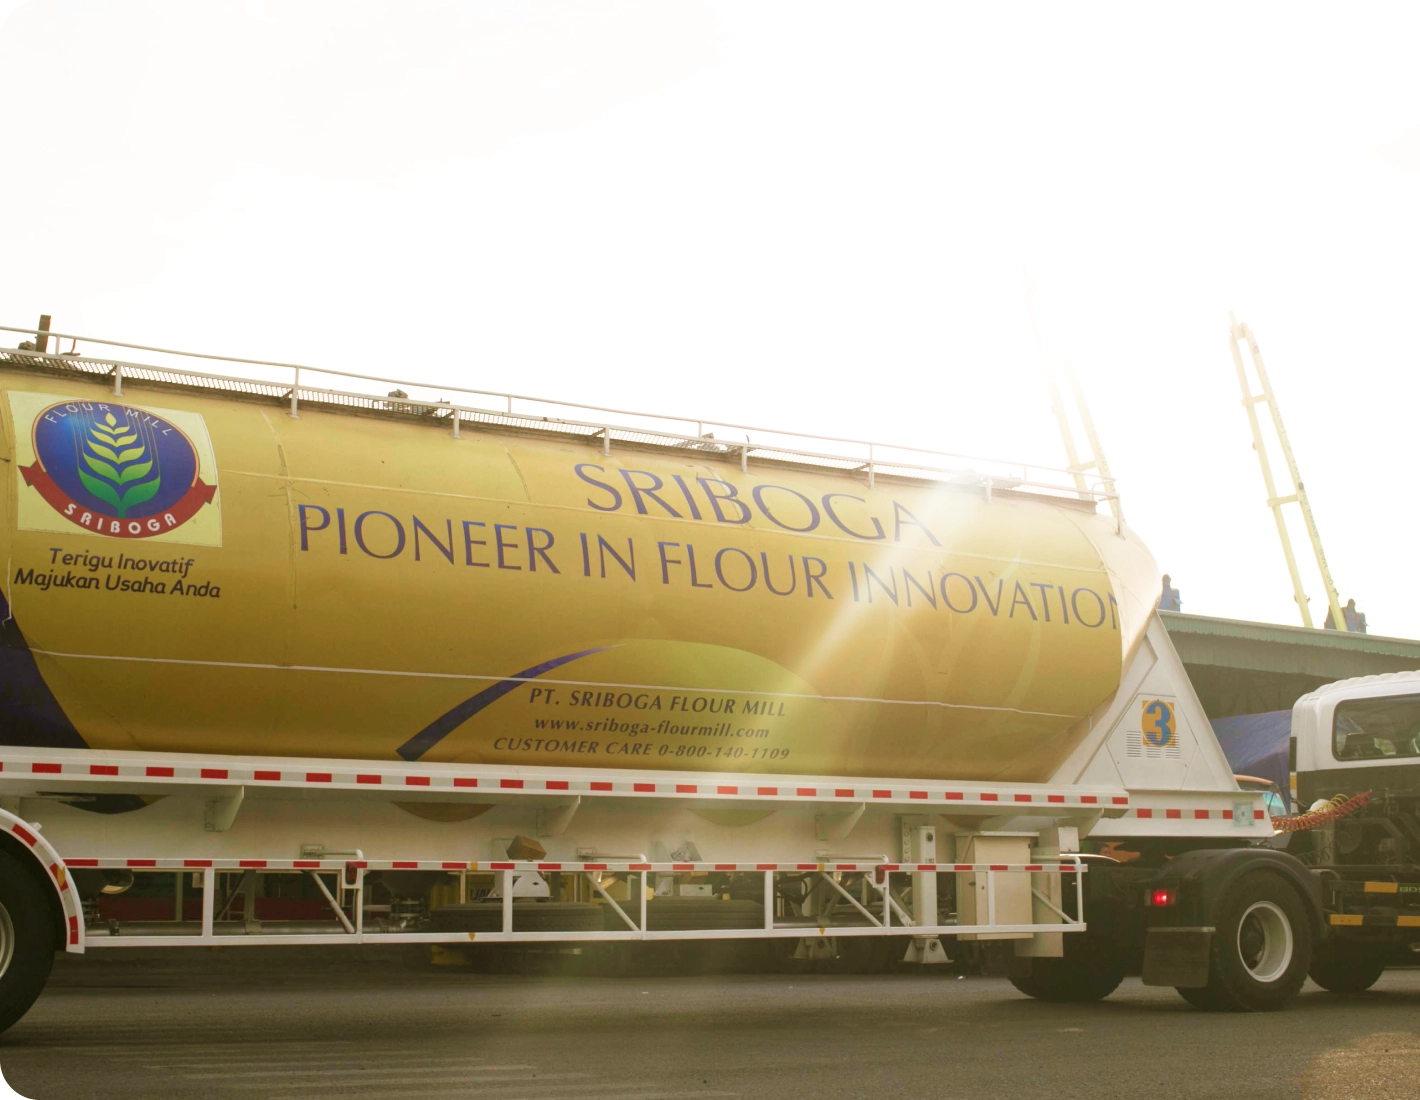 T Sriboga Flour Mill's truck that distribute Sriboga flour throughout Indonesia